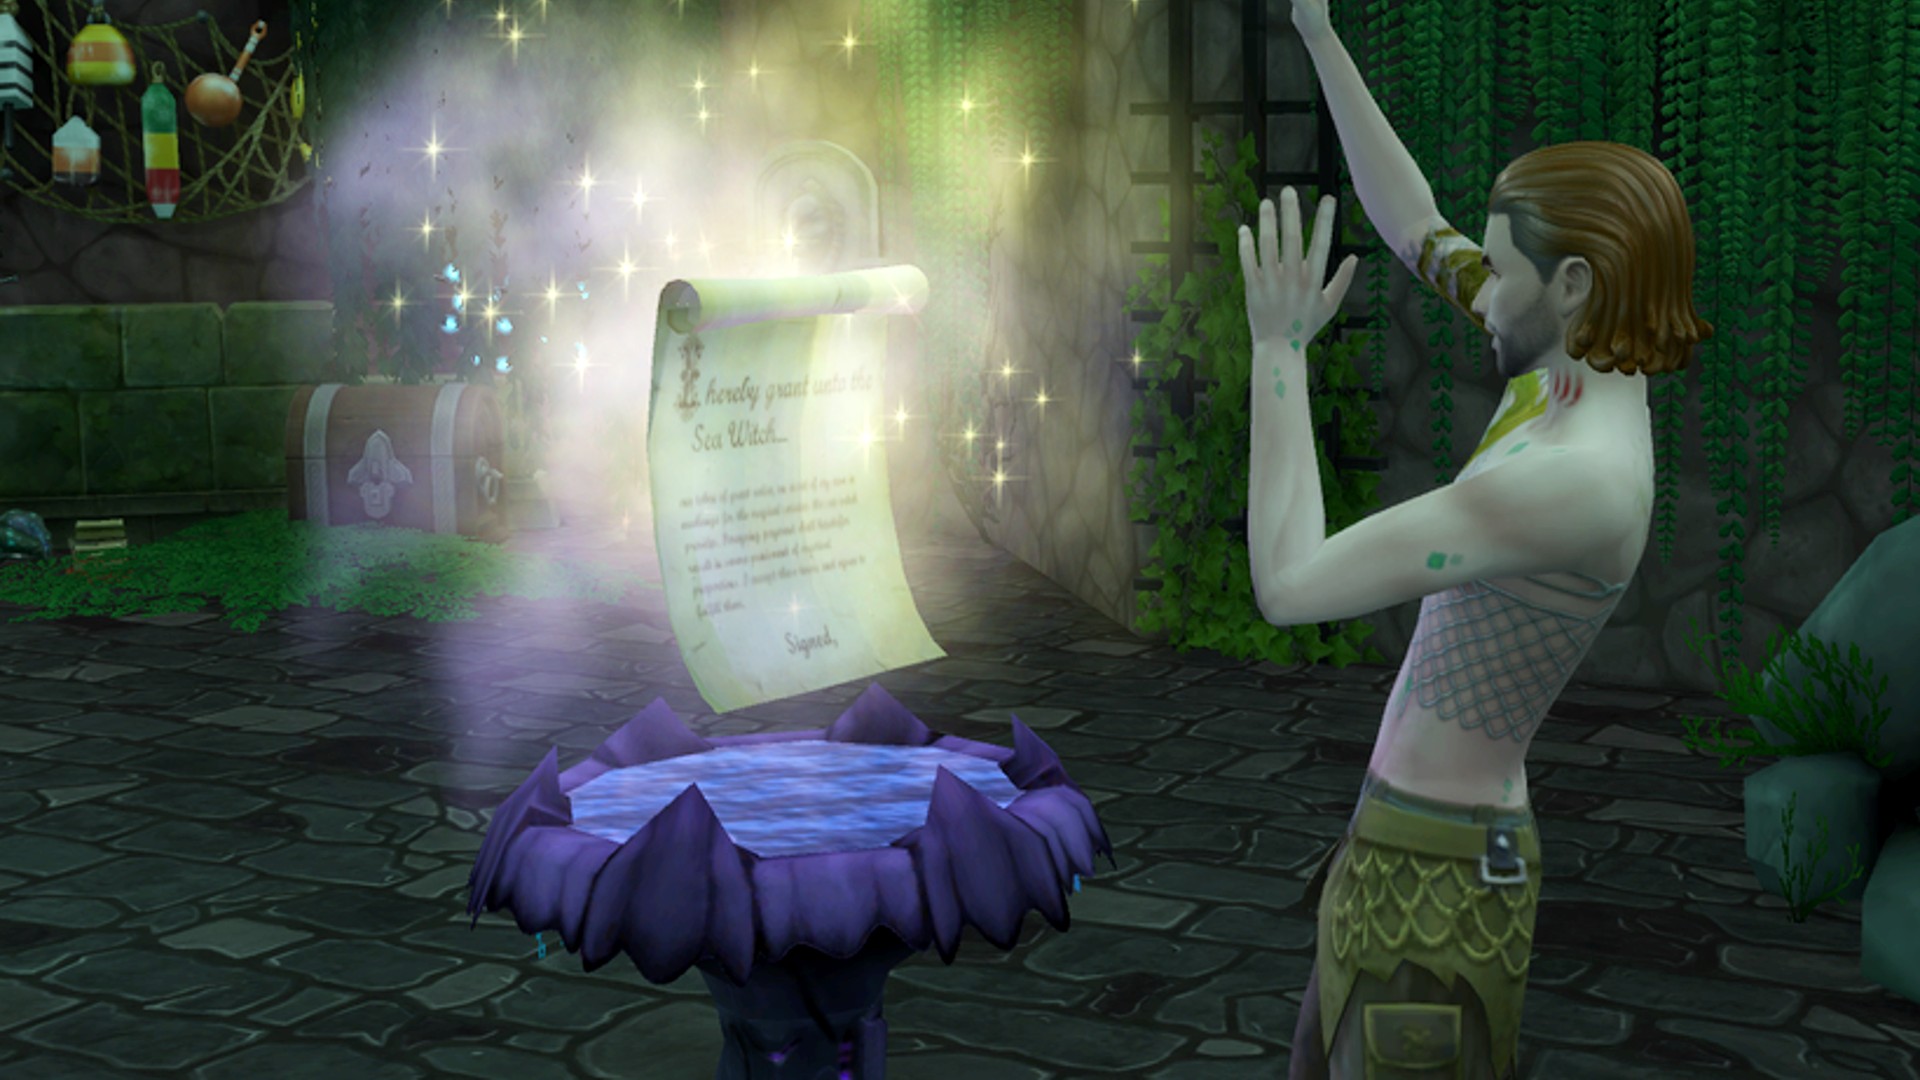 The Sims 4 SpinningPlumbobs mods